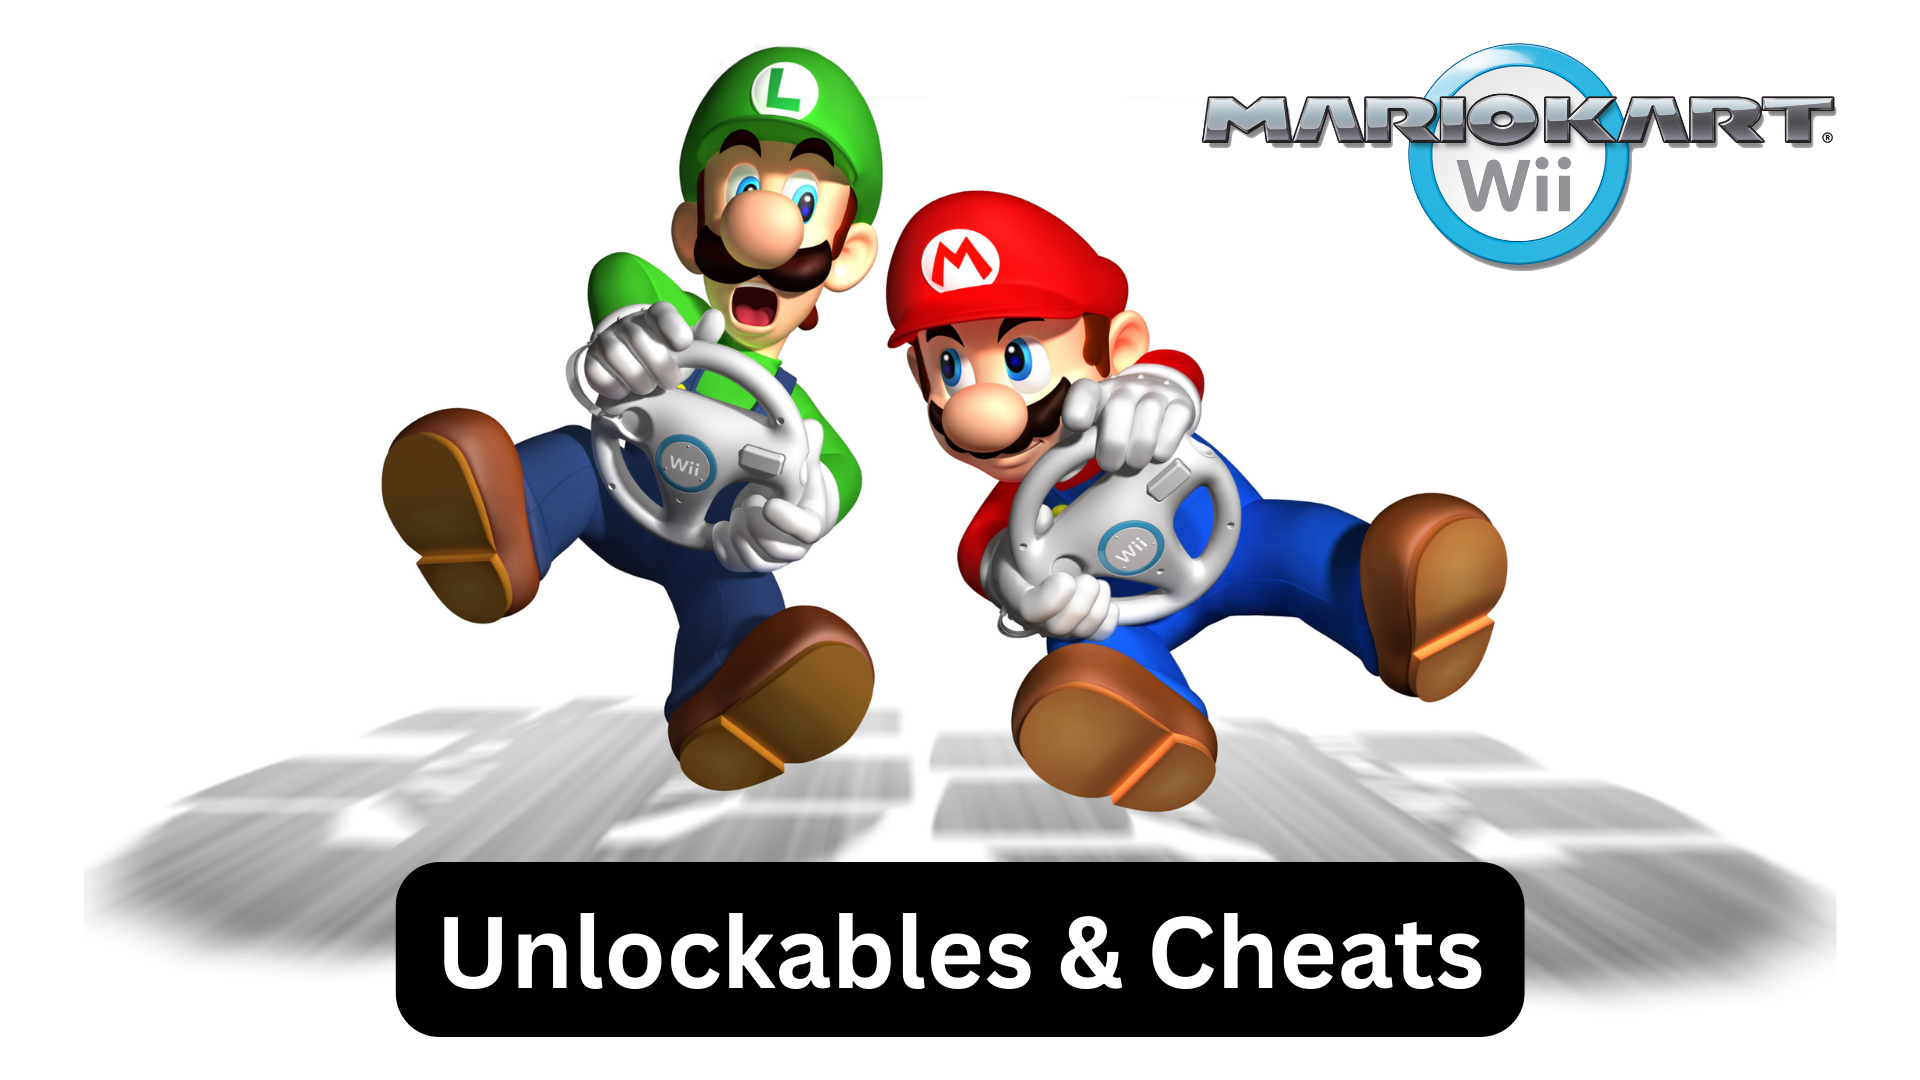 Mario Kart Wii Unlockables & Cheats